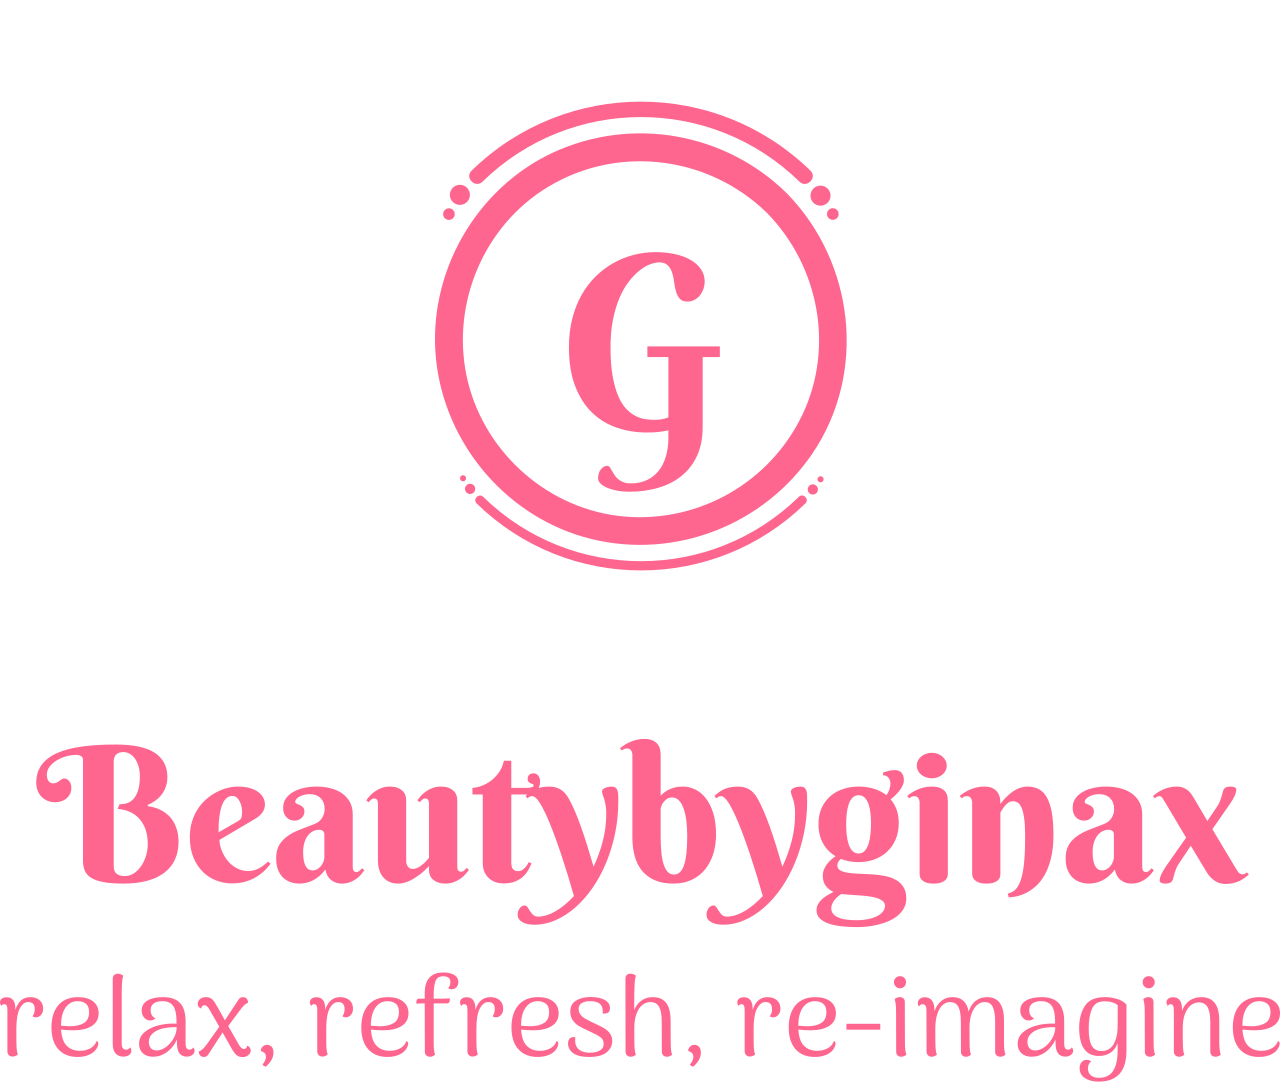 Beautybyginax's logo